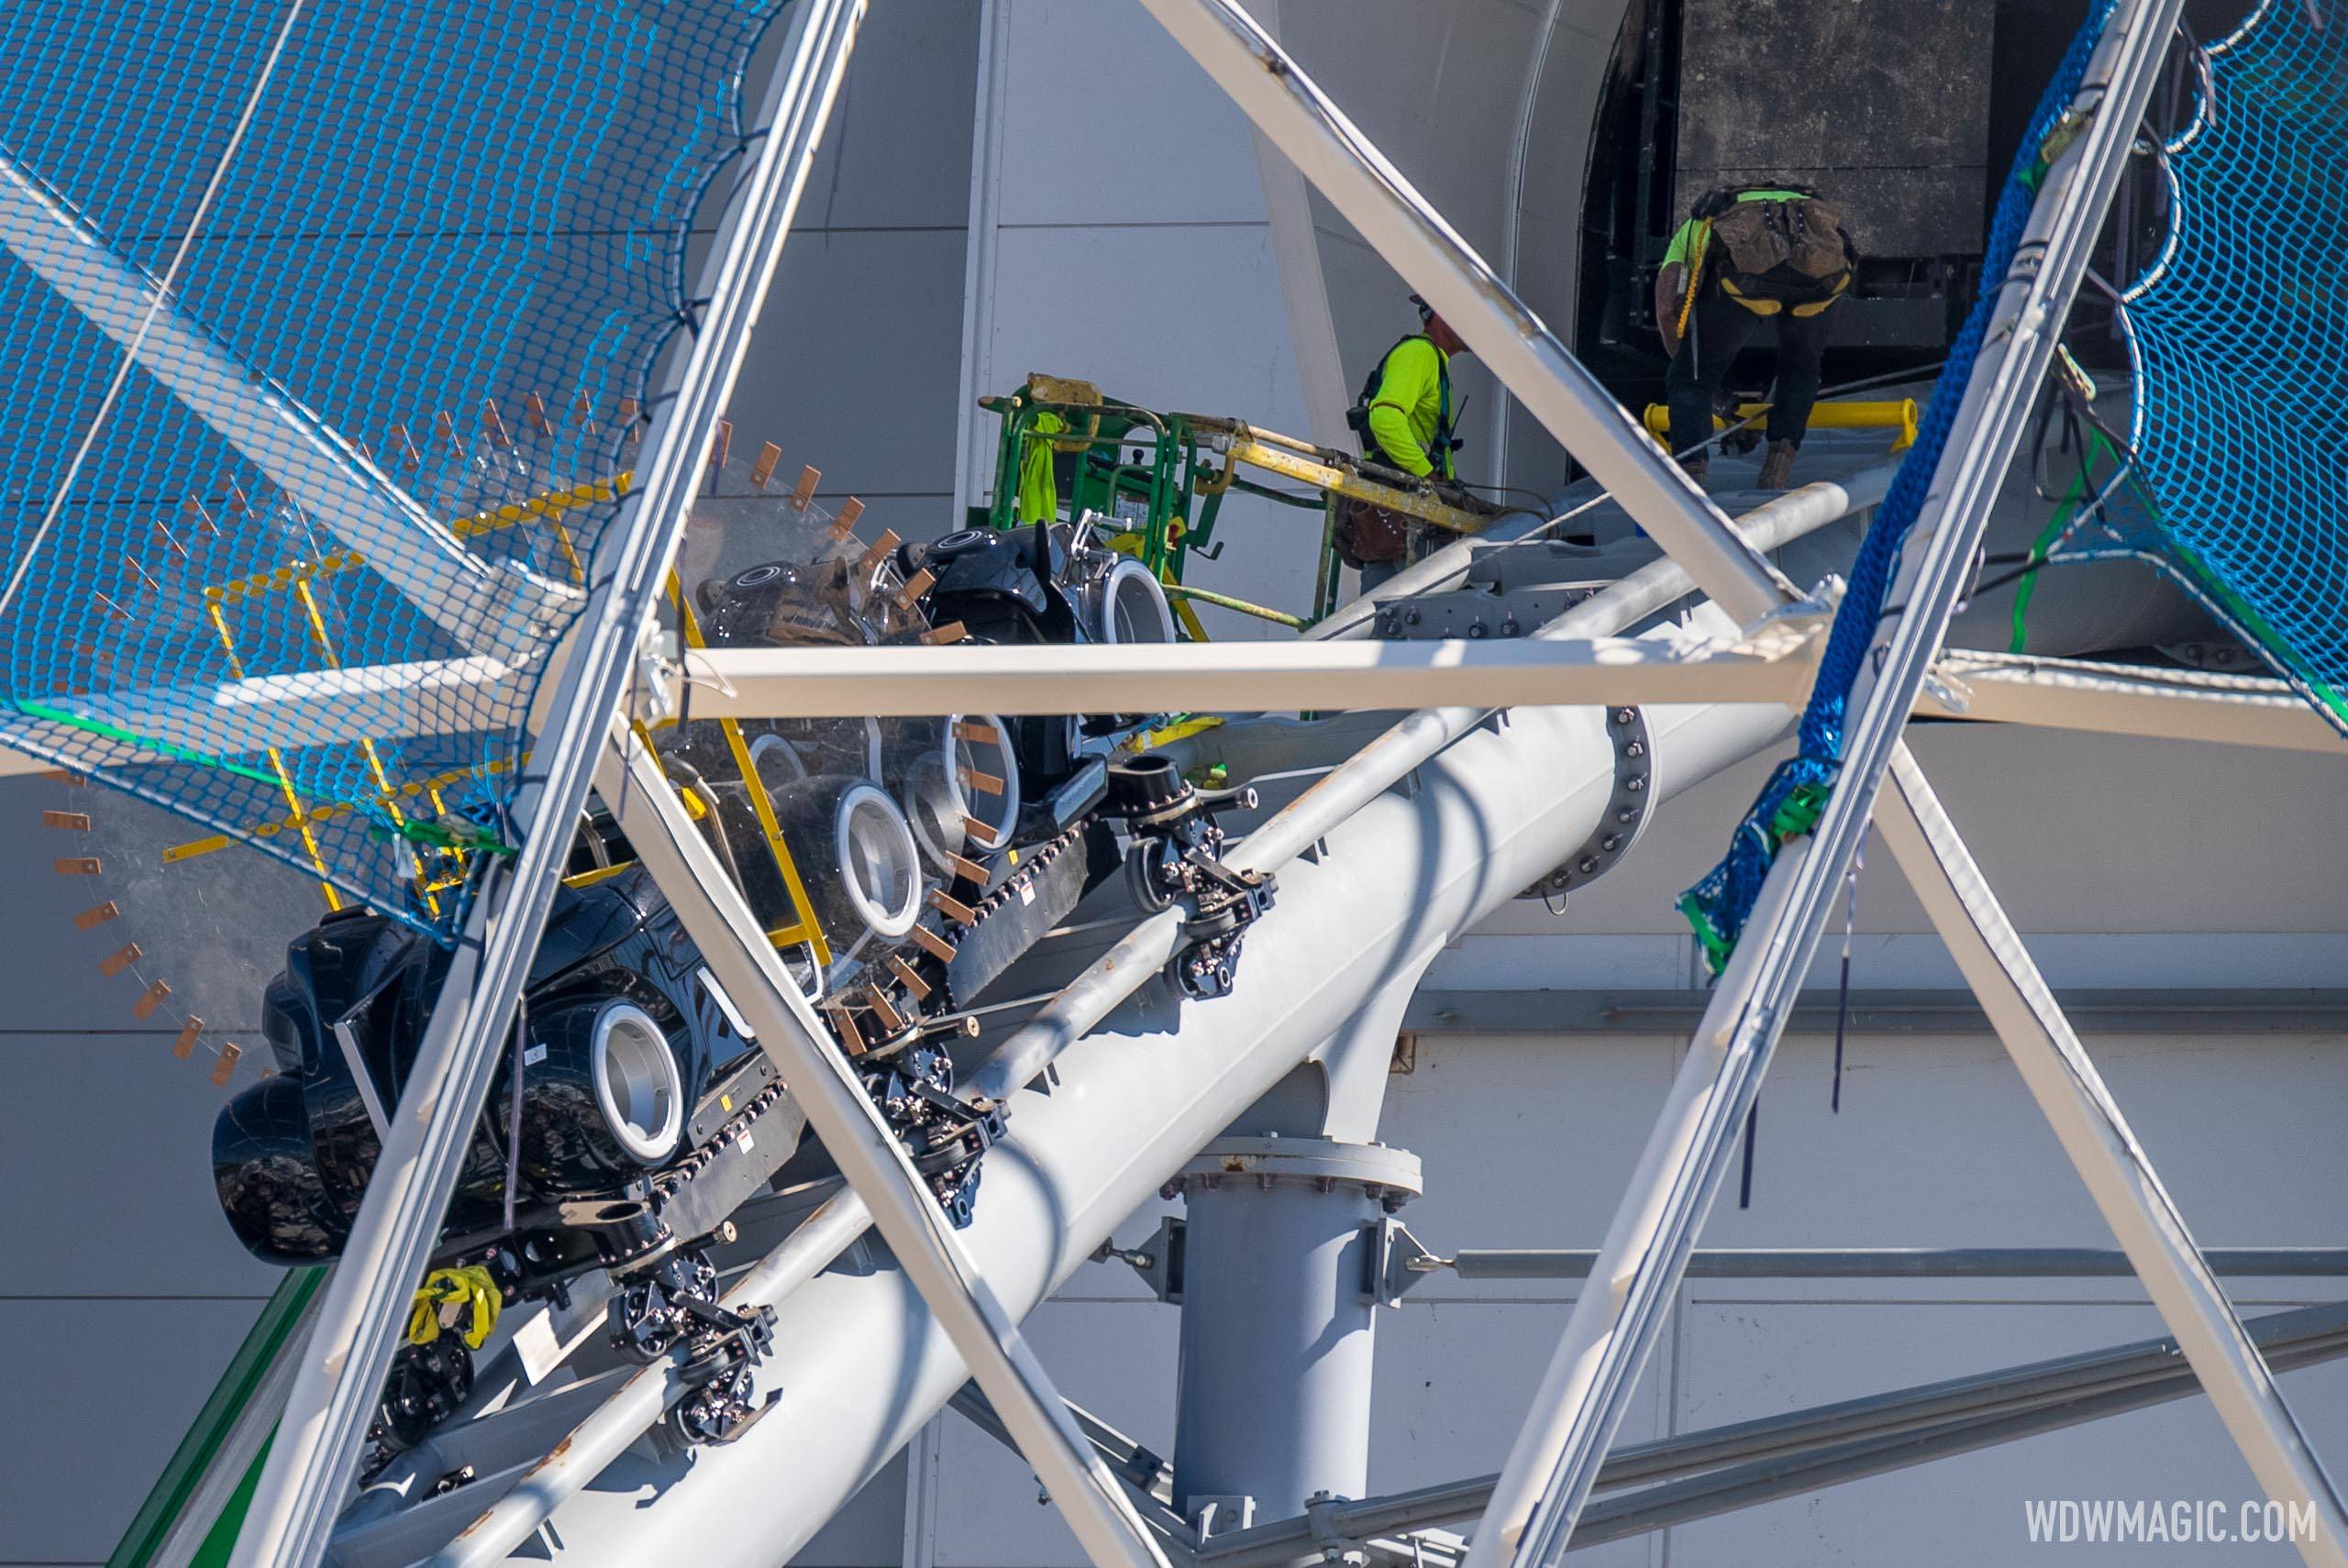 Ride vehicle push-pull testing gets underway at Walt Disney World's TRON Lightcycle Run rollercoaster